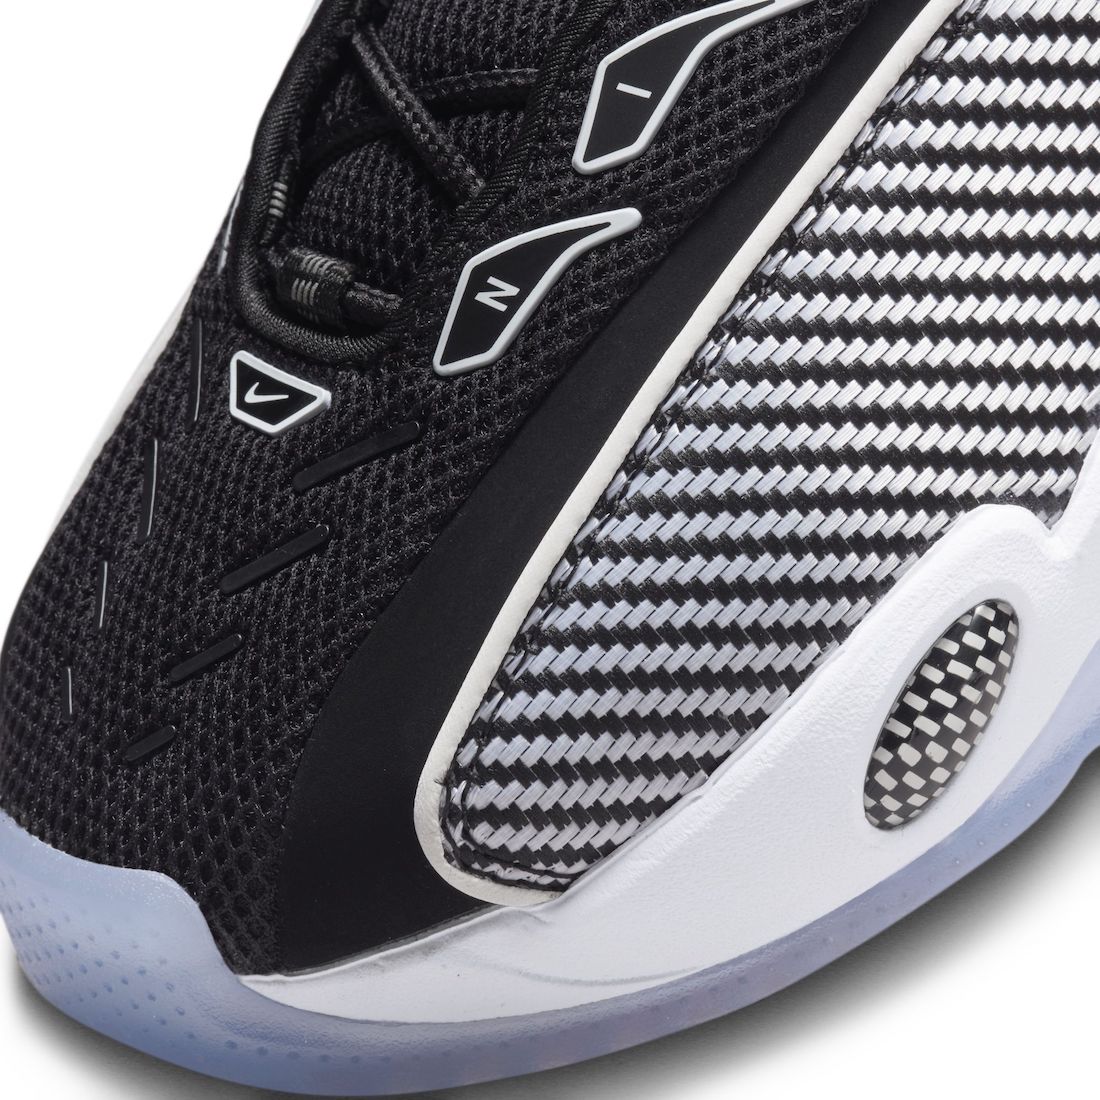 Nike NOCTA Glide Black White DM0879 001 Release Date 6